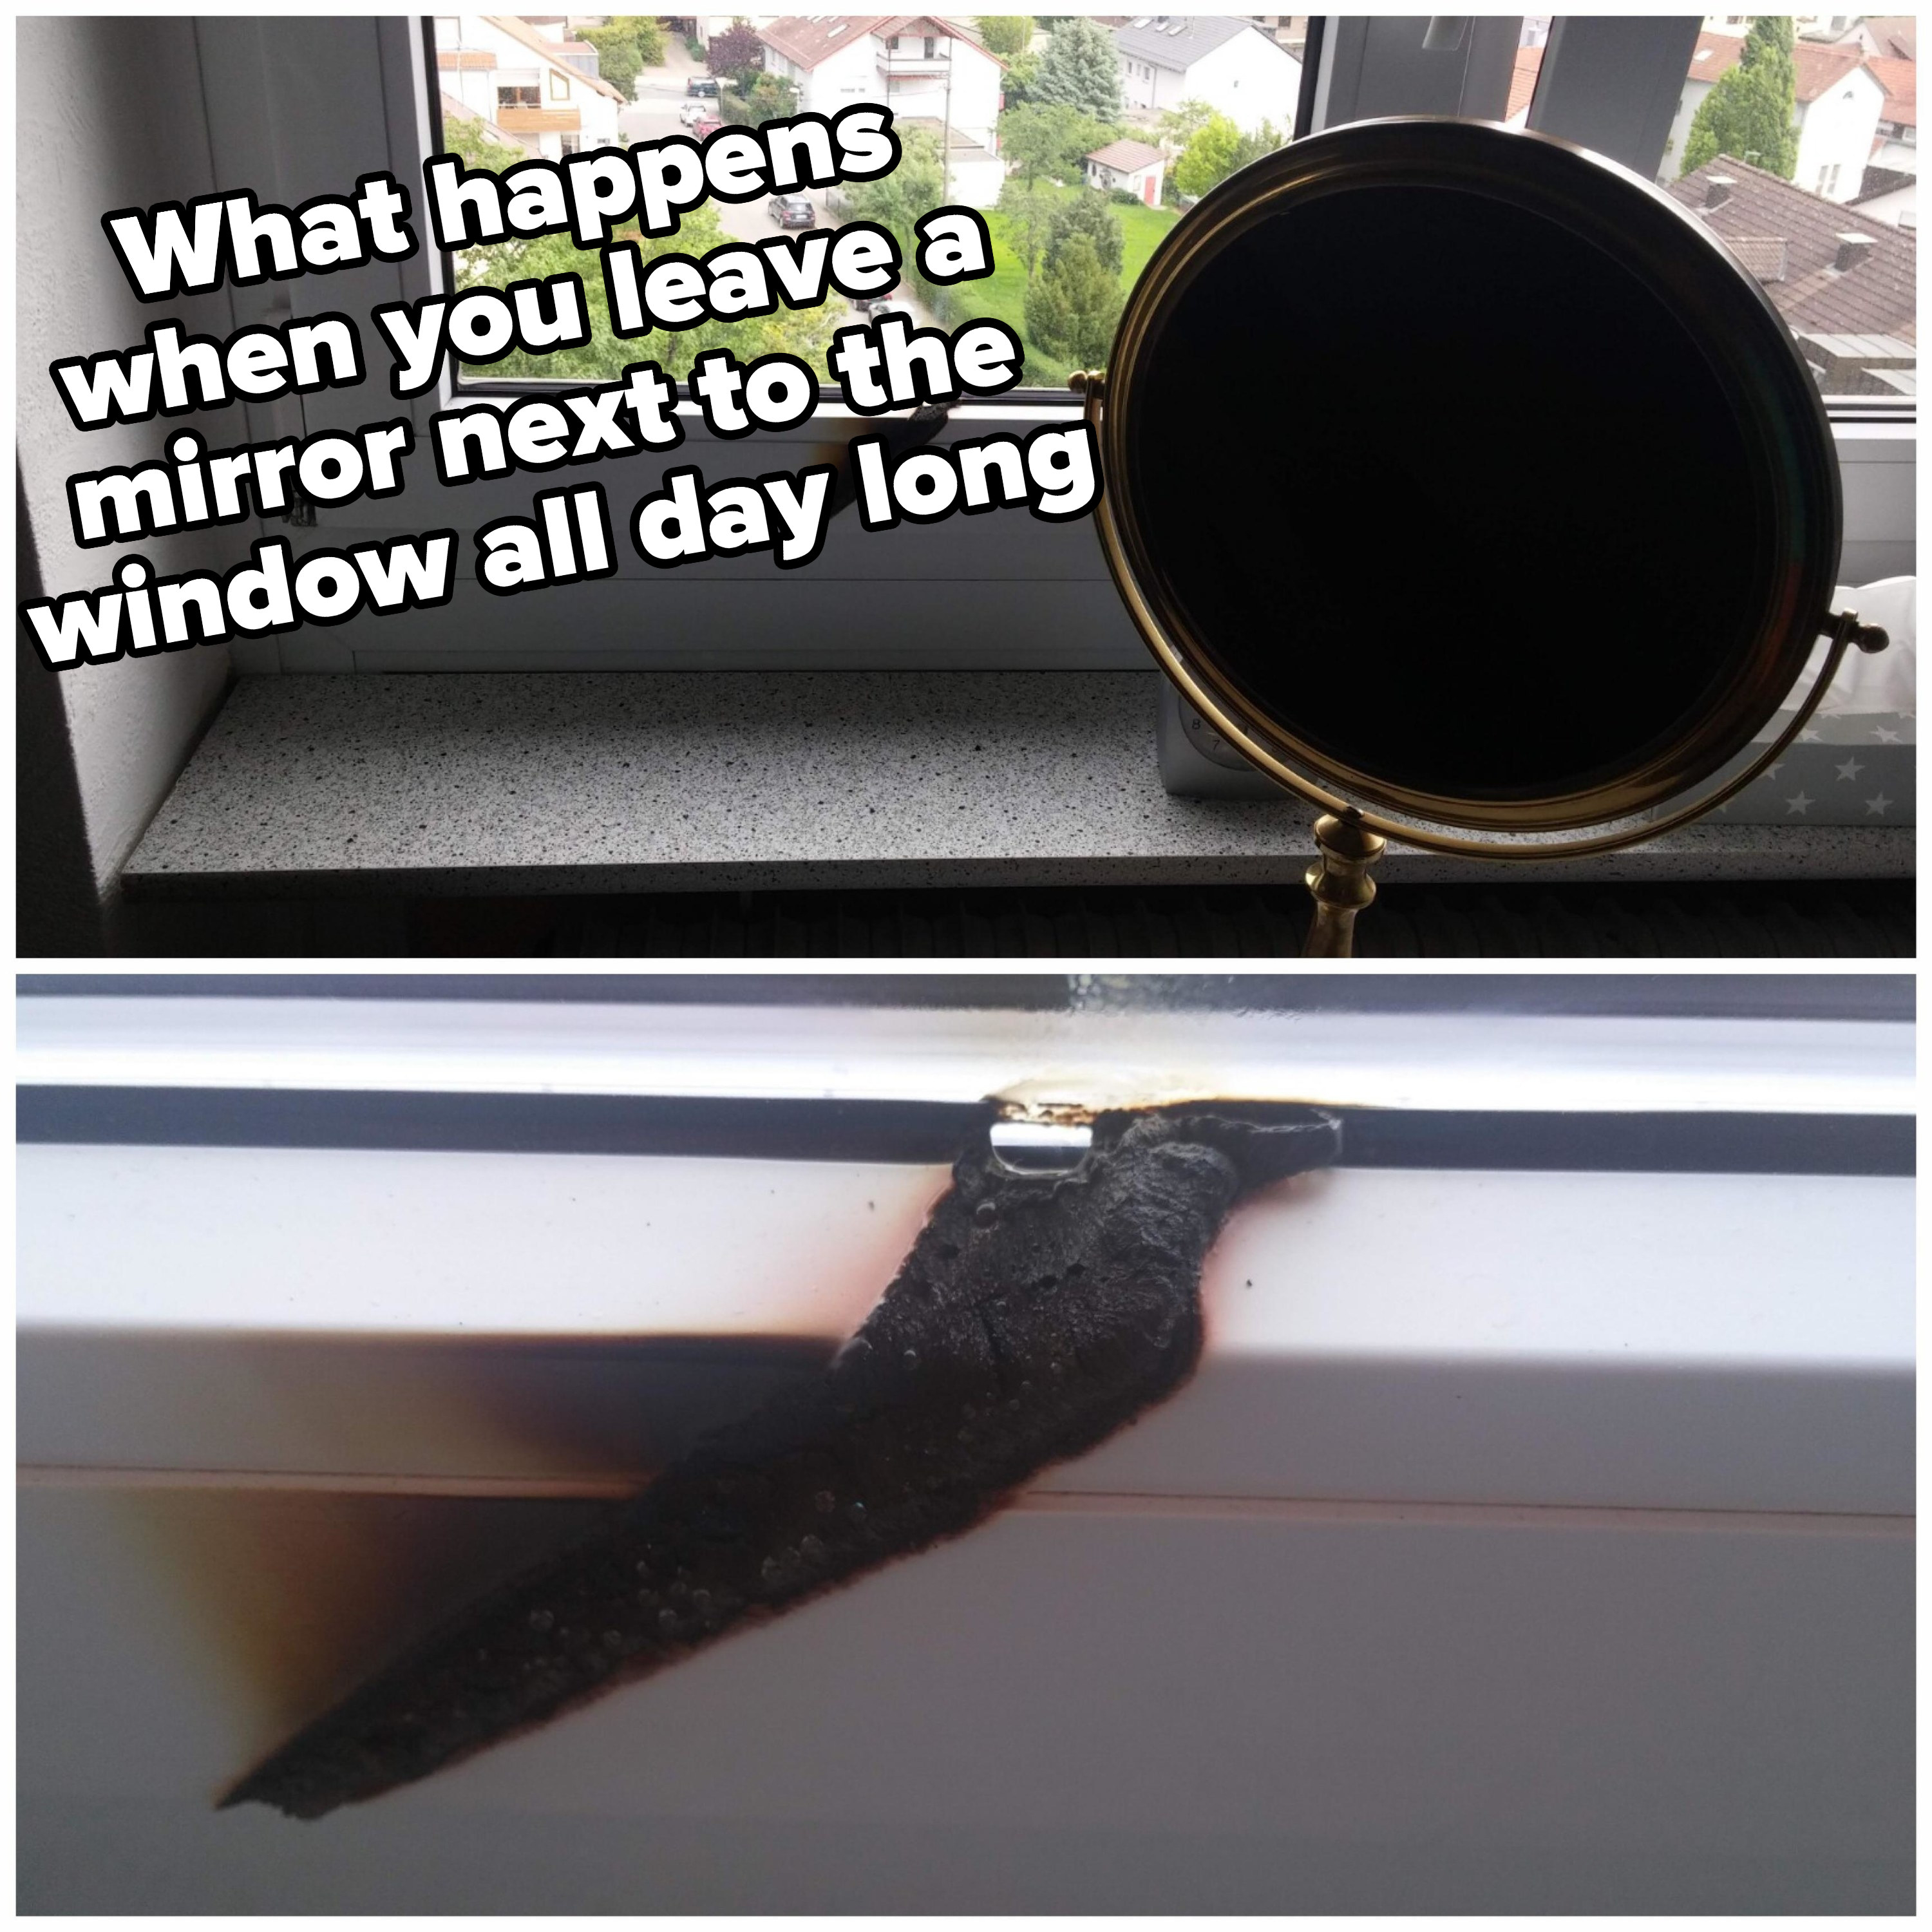 A burn on the window sill